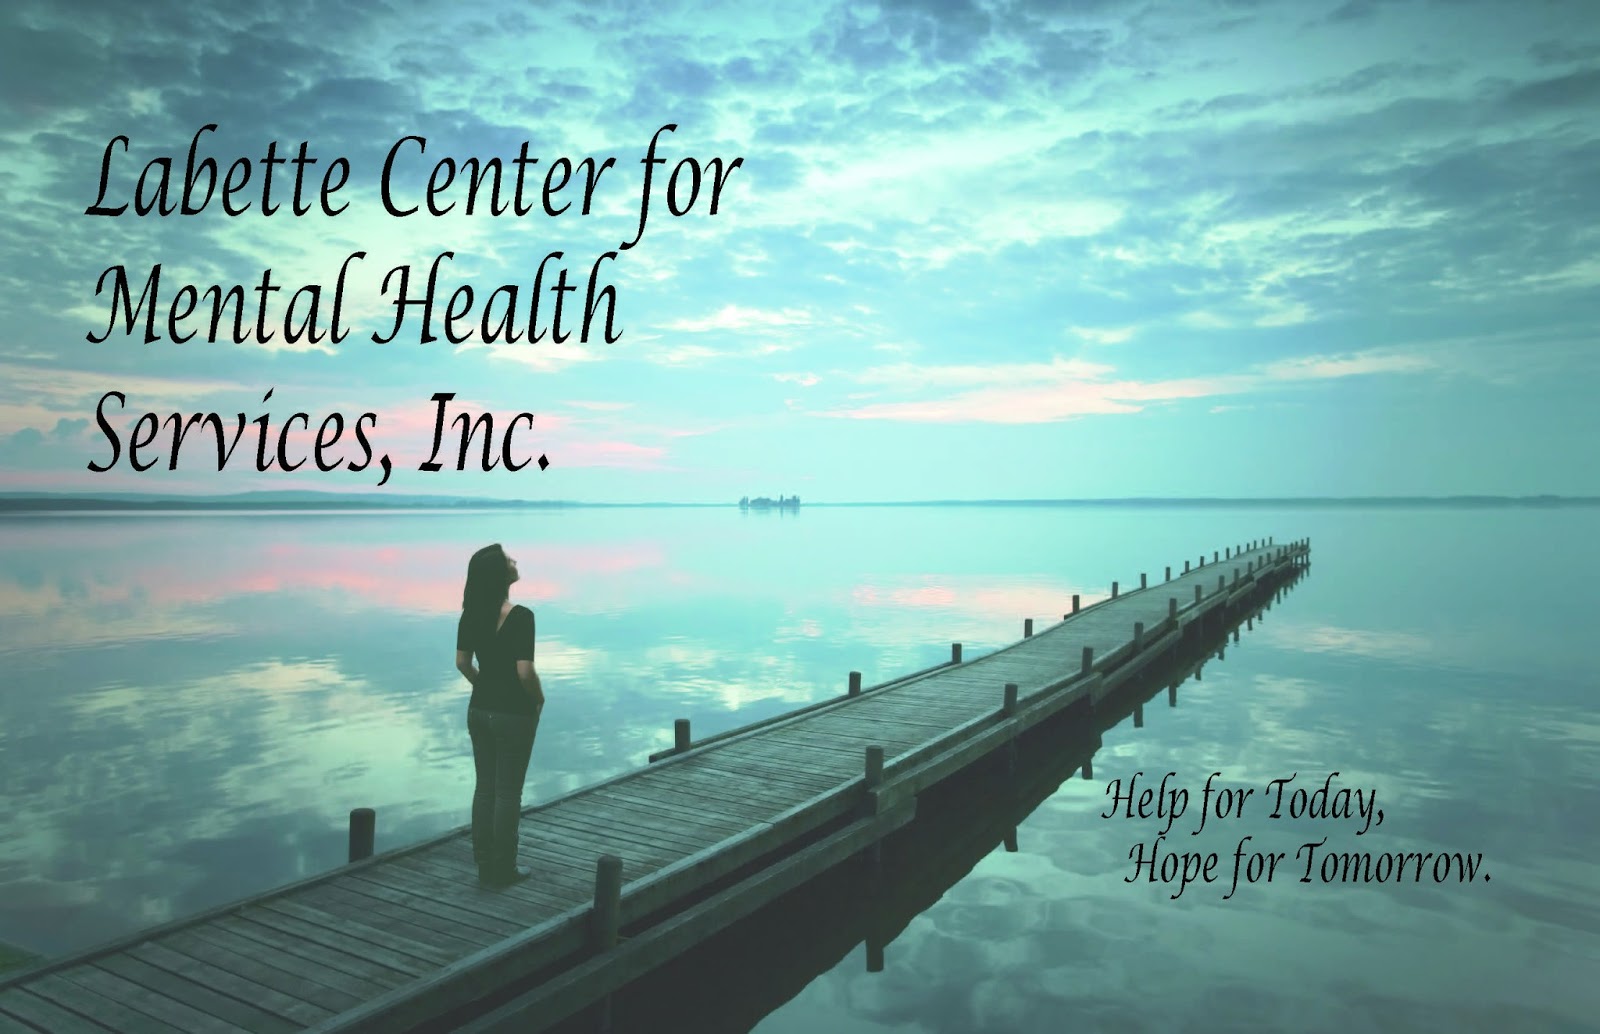 Labette Center for Mental Health Services